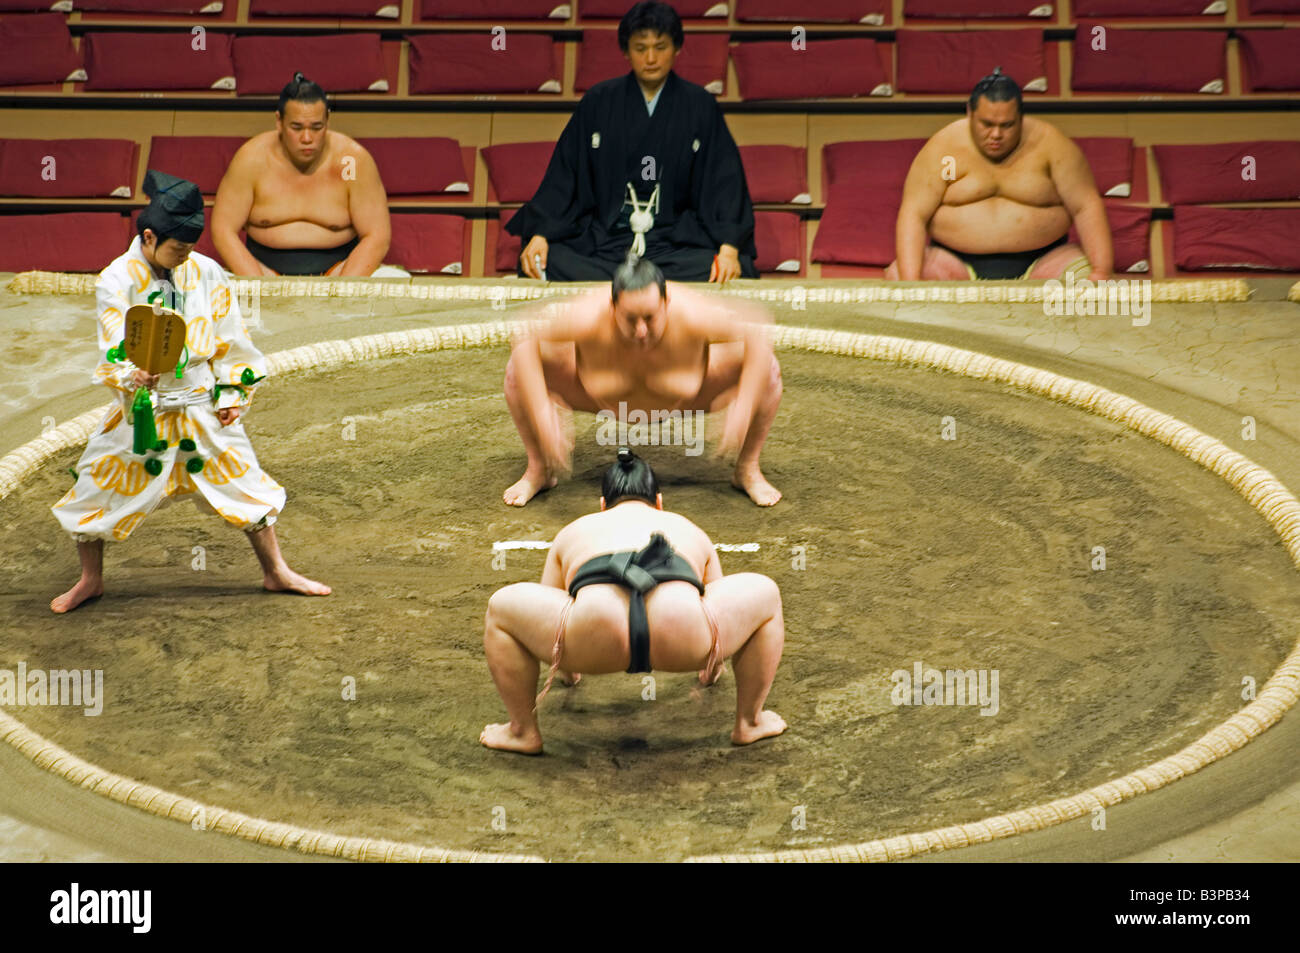 Japan, Bezirk Ryogoku Kokugikan Halle Stadion. Grand Taikai Sumo-Wrestling-Turnier-Sumo-Ringer im Wettbewerb Stockfoto